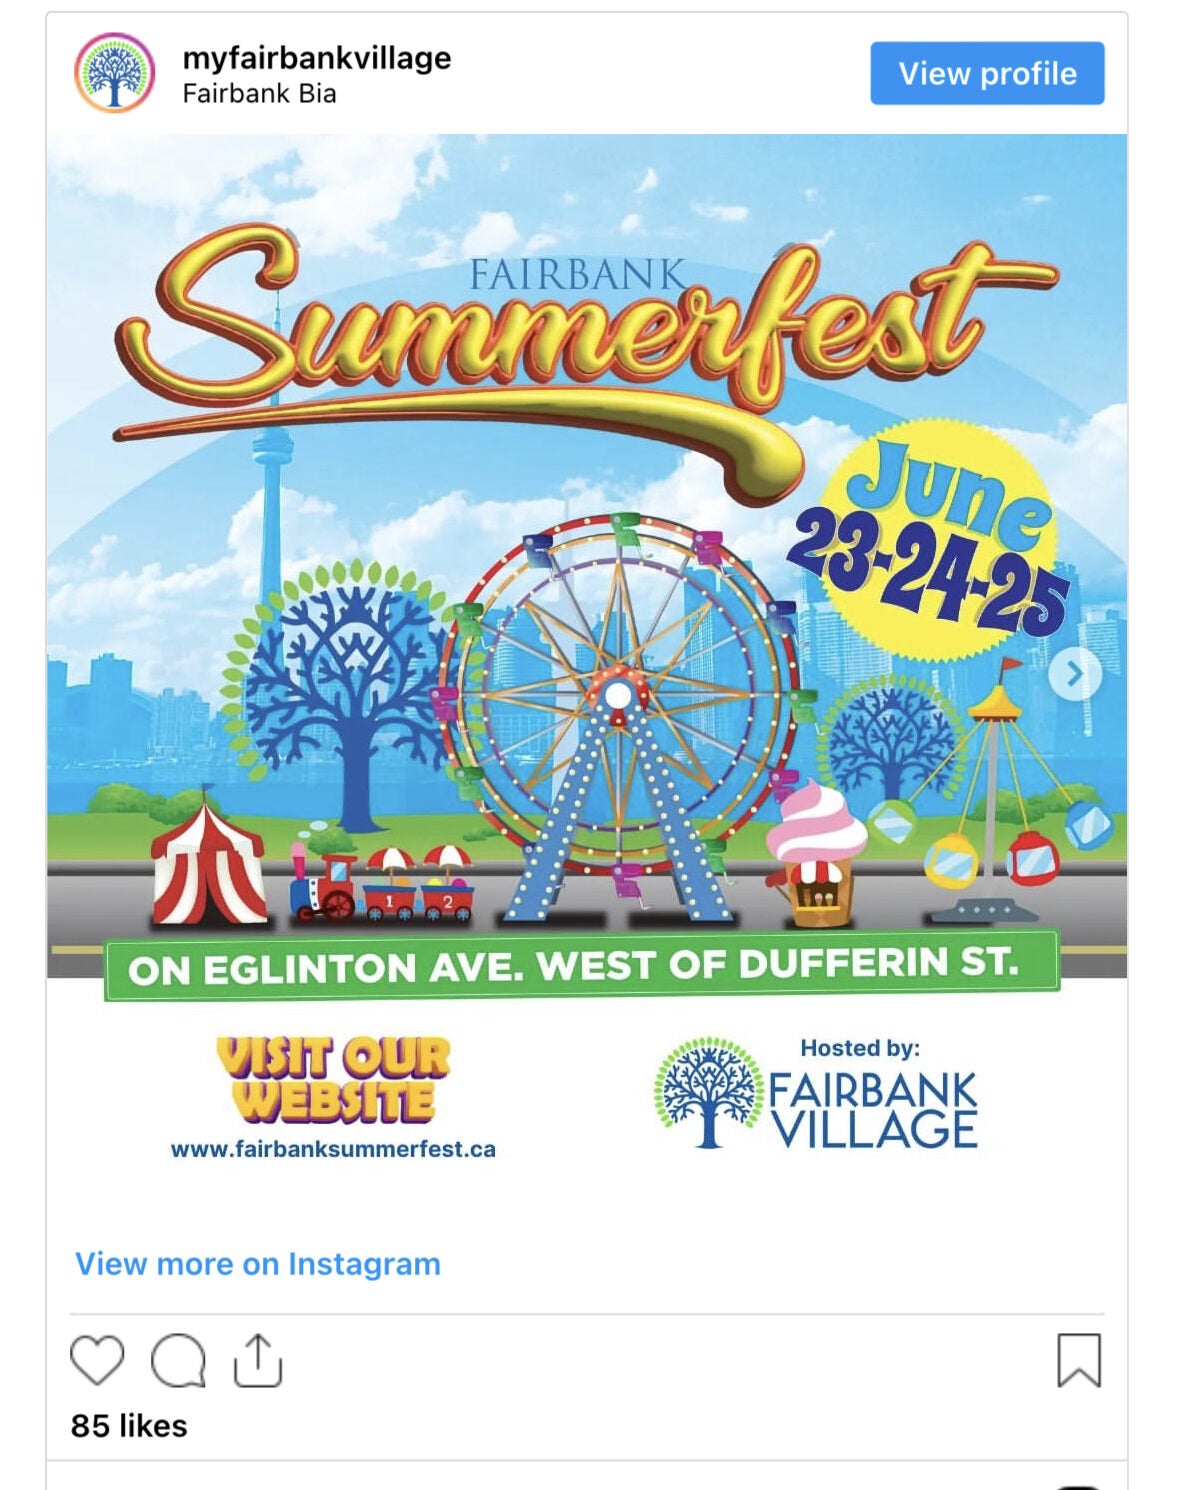 Fairbank Summerfest] Toronto's getting a three-day street festival